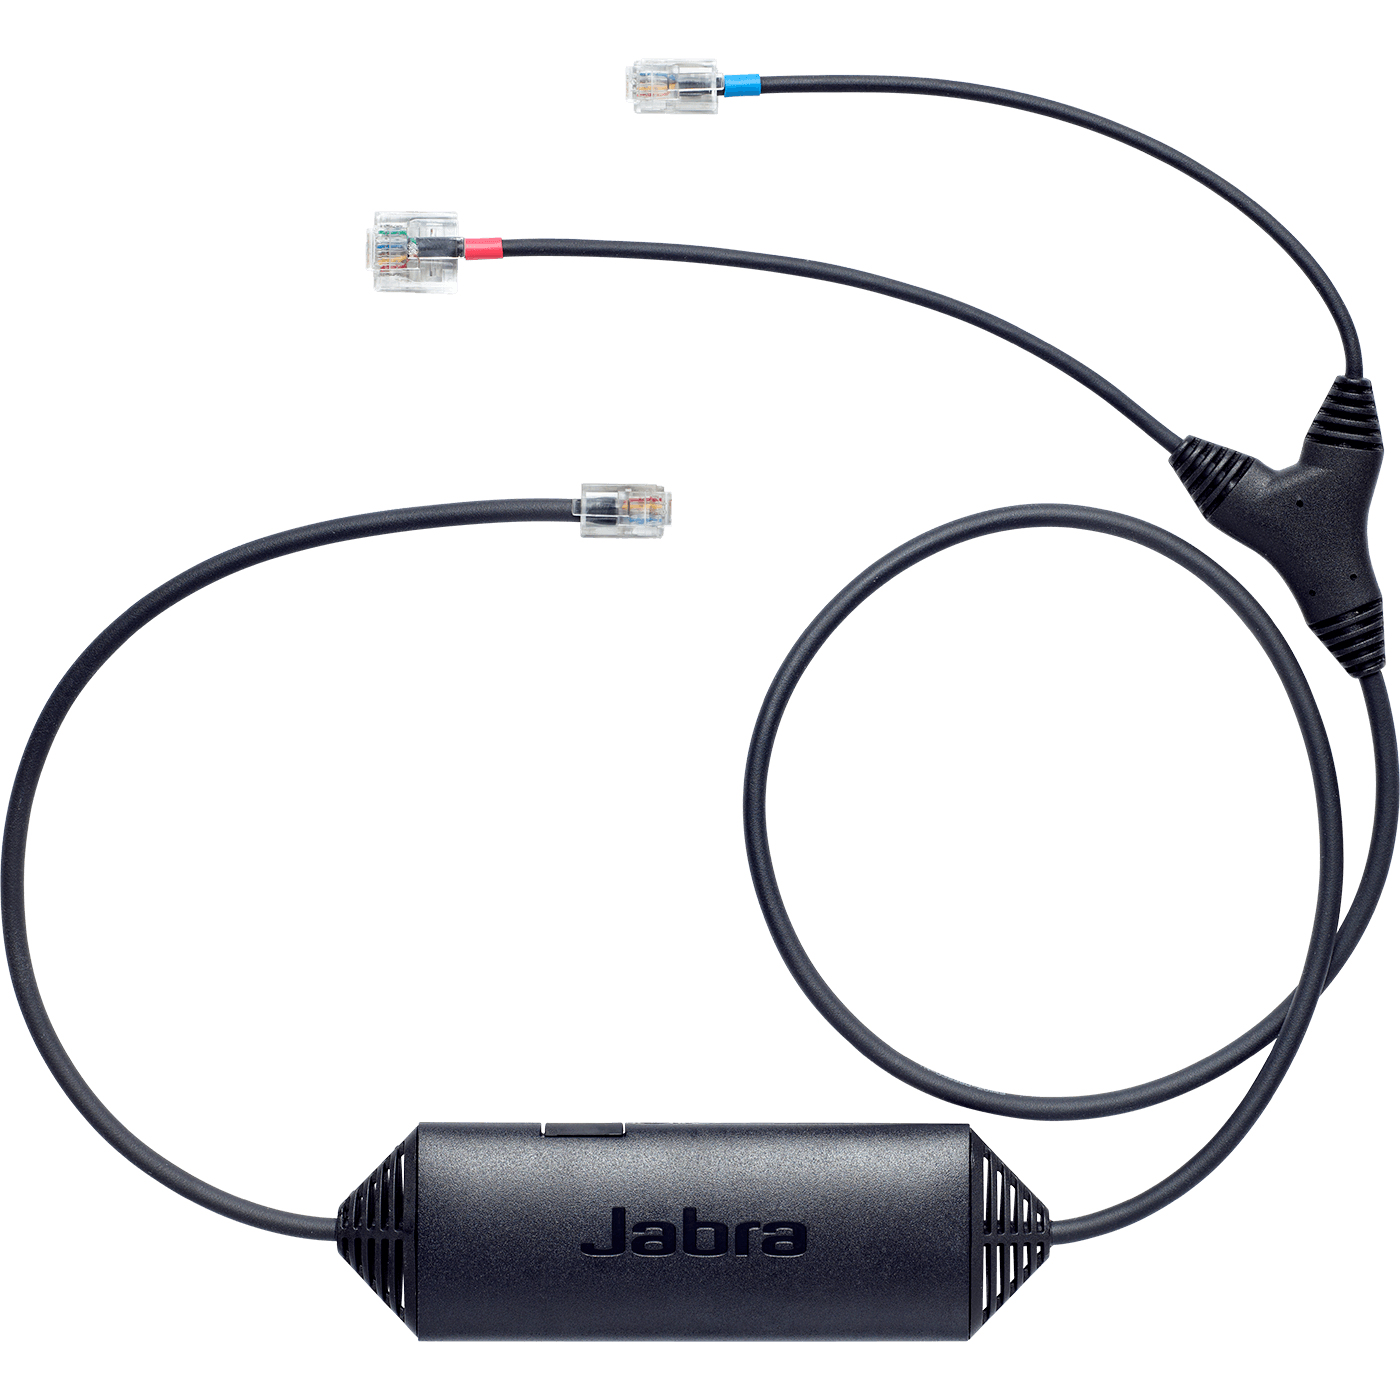 insulator Stolt ordlyd Jabra 14201-33 tilbehør til hovedtelefon/headset EHS-adapter, 0 in  distributor/wholesale stock for resellers to sell - Stock In The Channel